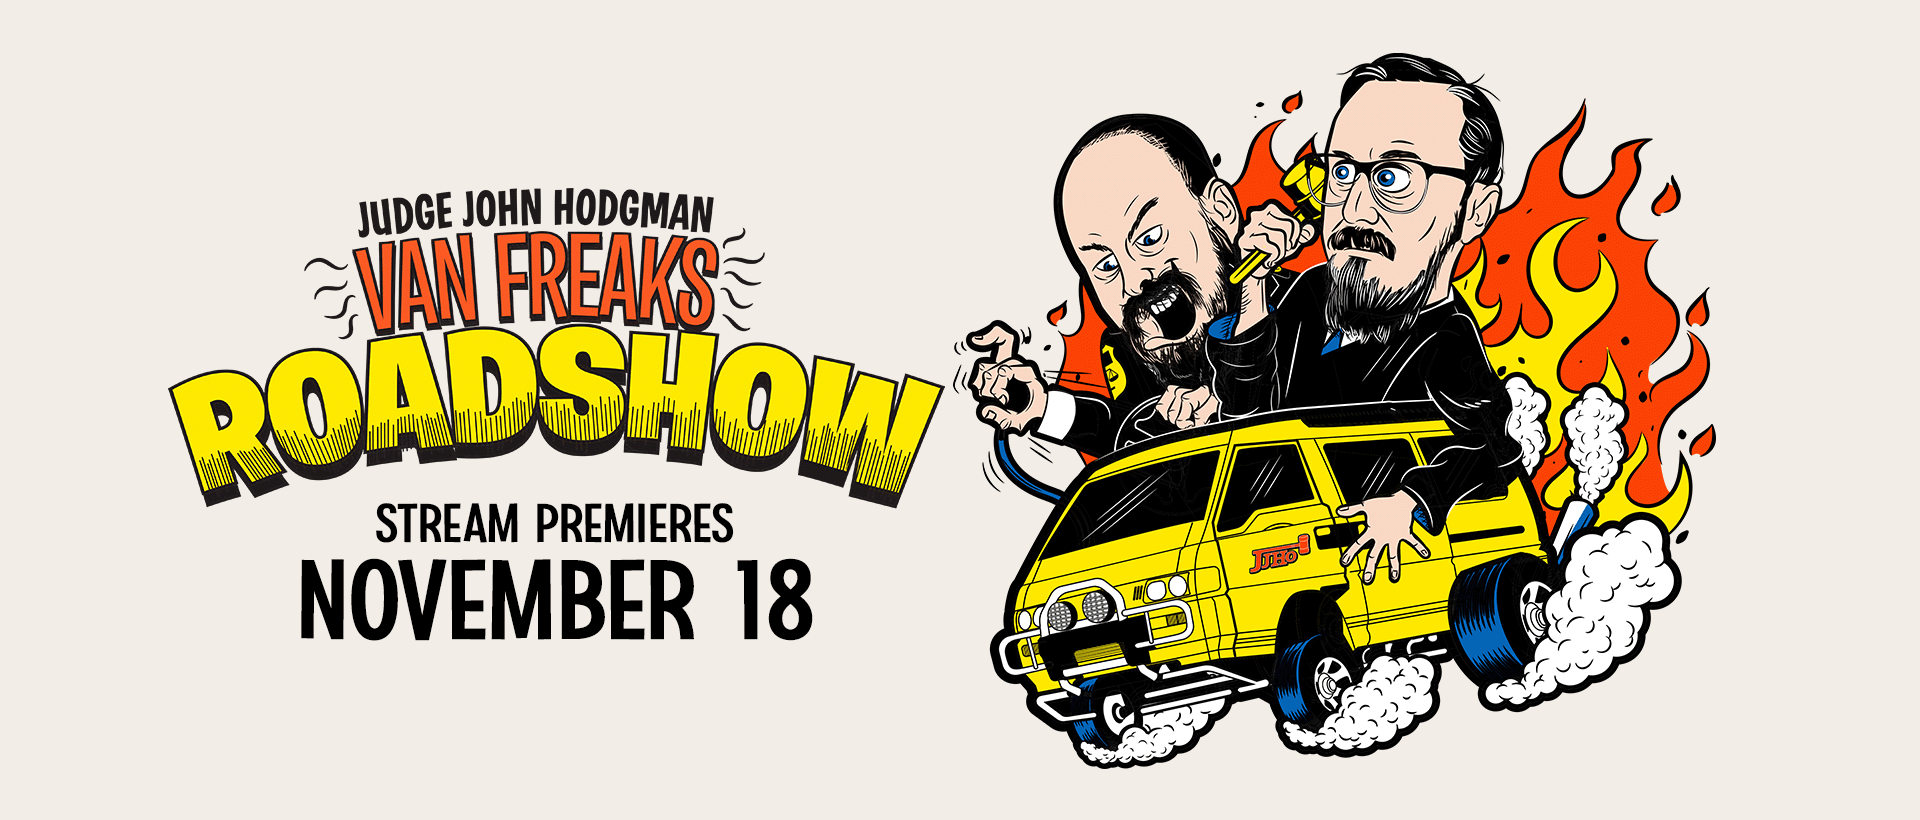 Van Freaks Roadshow logo with the text, "Steam premieres November 18" 